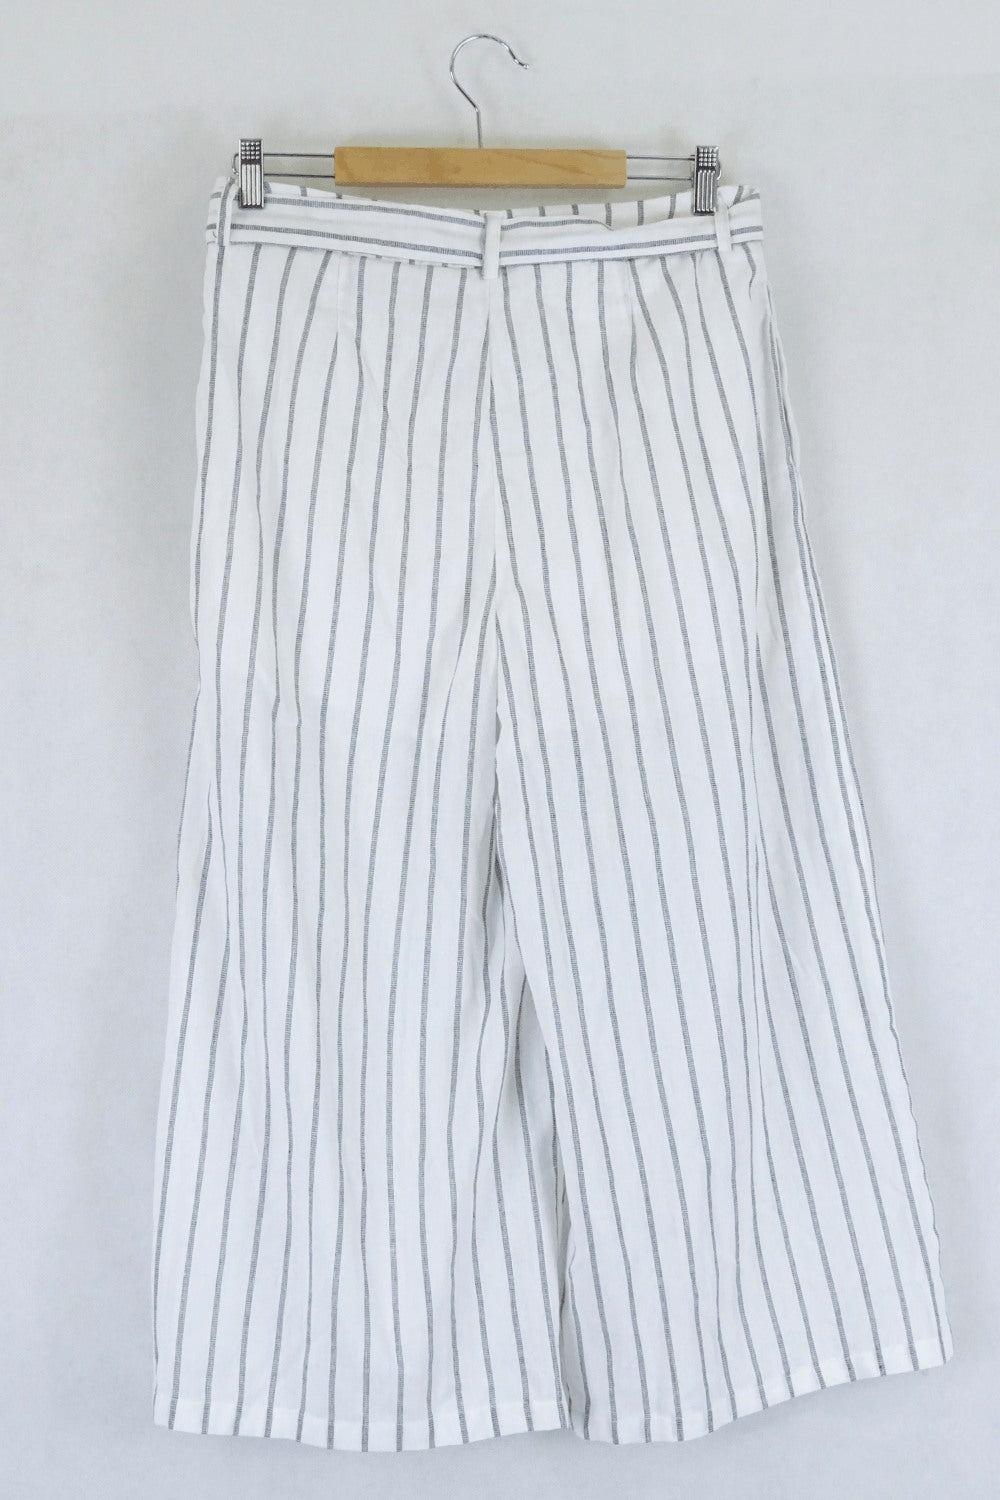 Mia Striped White And Black Pants 14